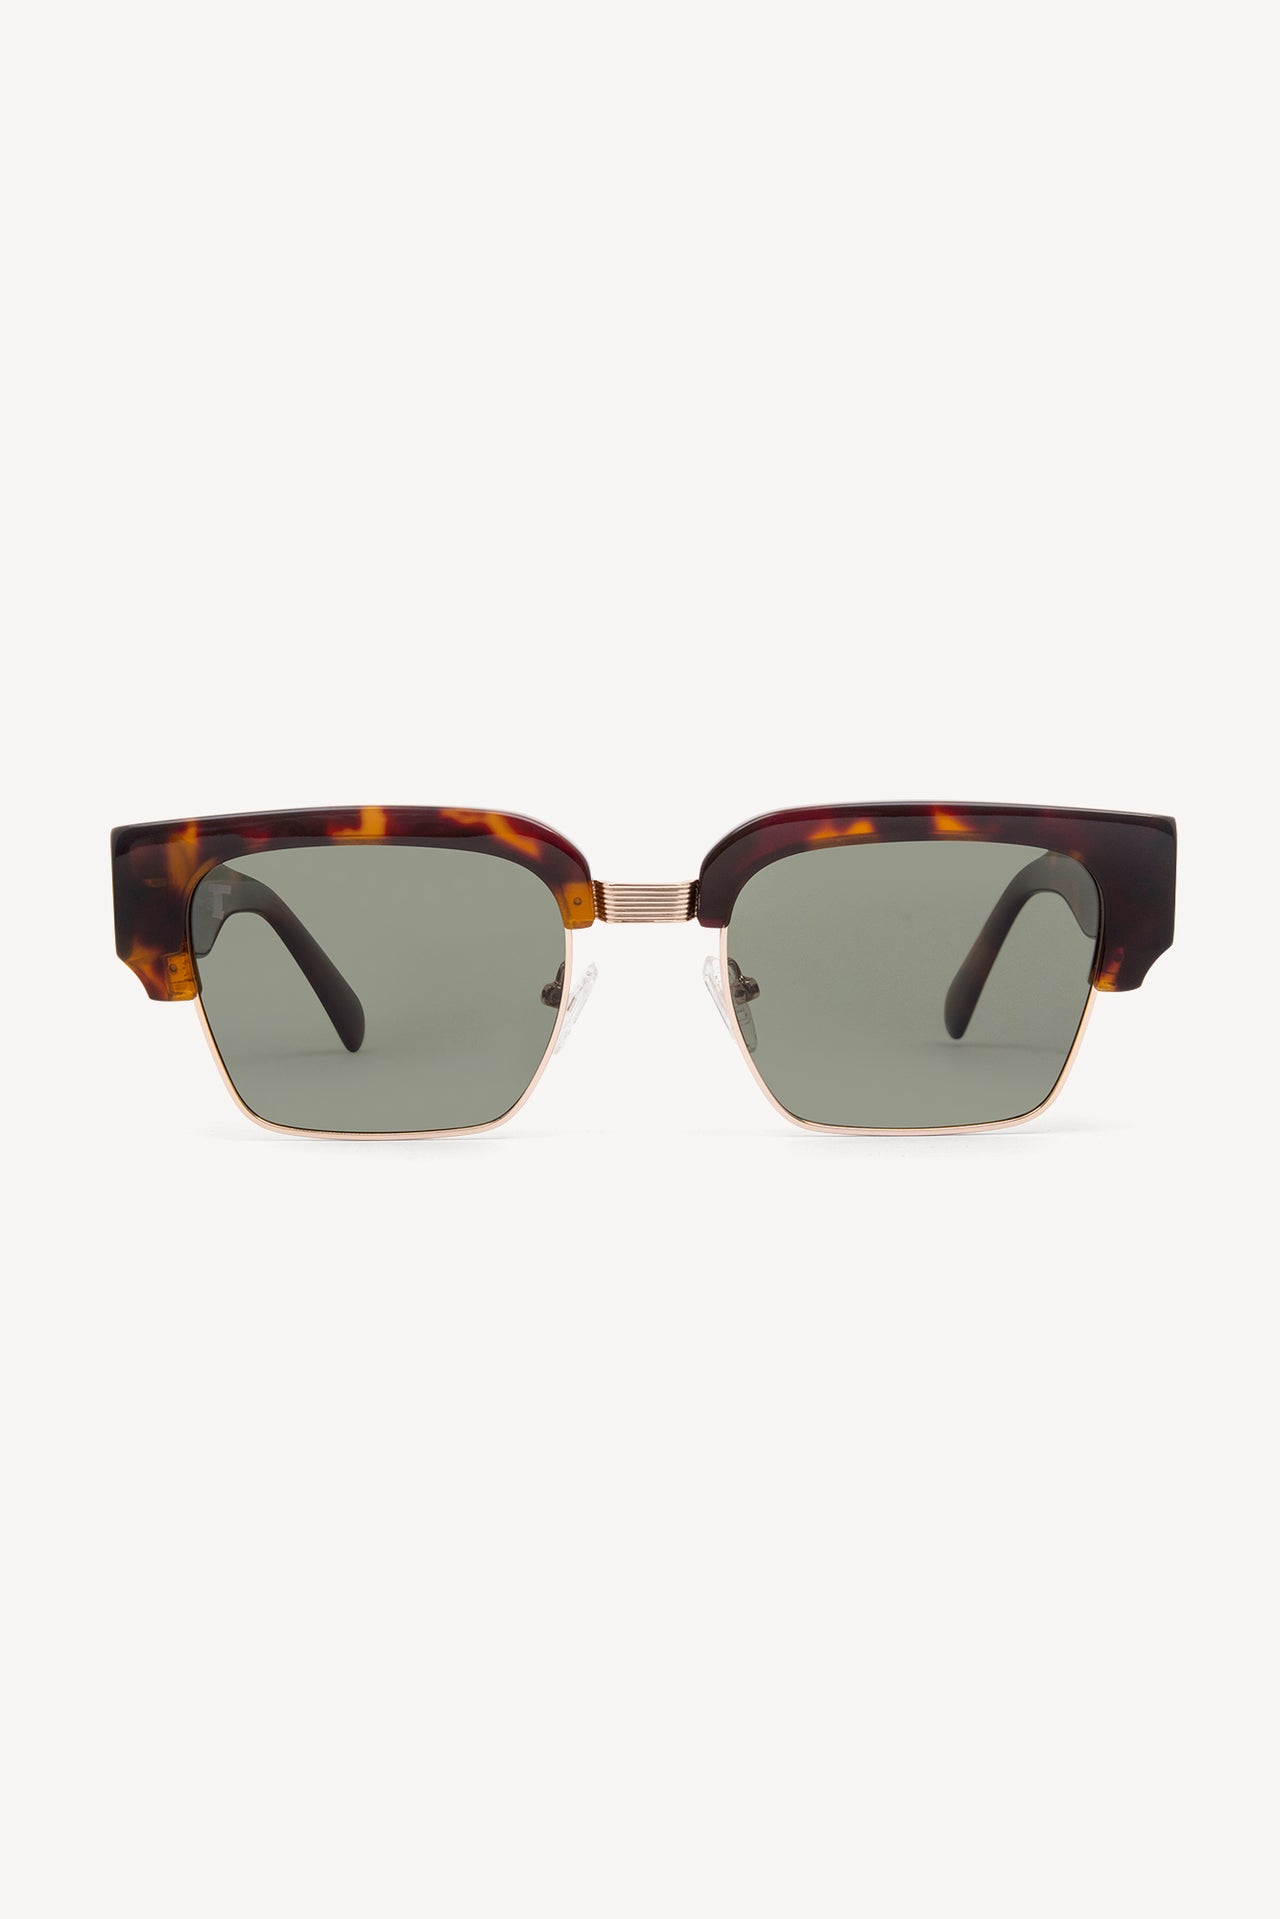 TOATIE Monte Carlo Sunglasses TORTOISE/GREEN